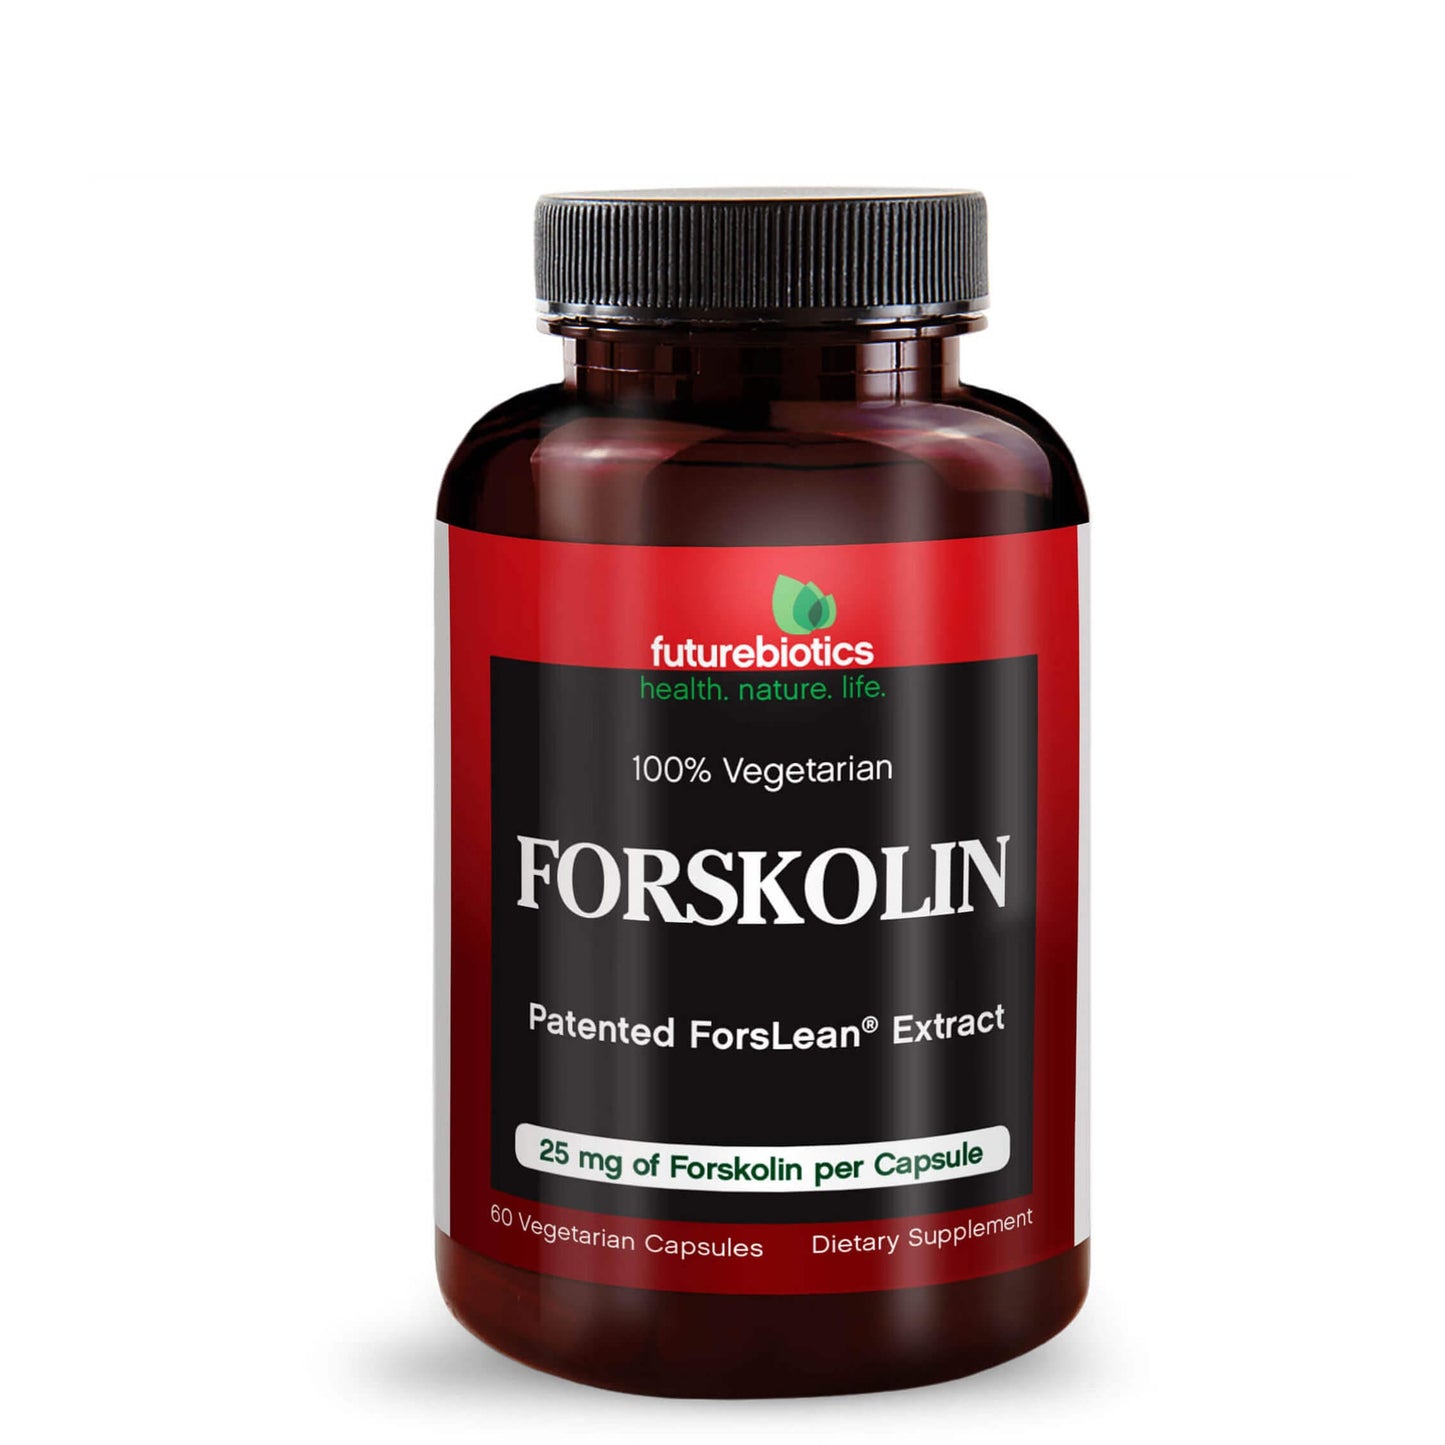 Futurebiotics Forskolin 25mg, 60 Capsules